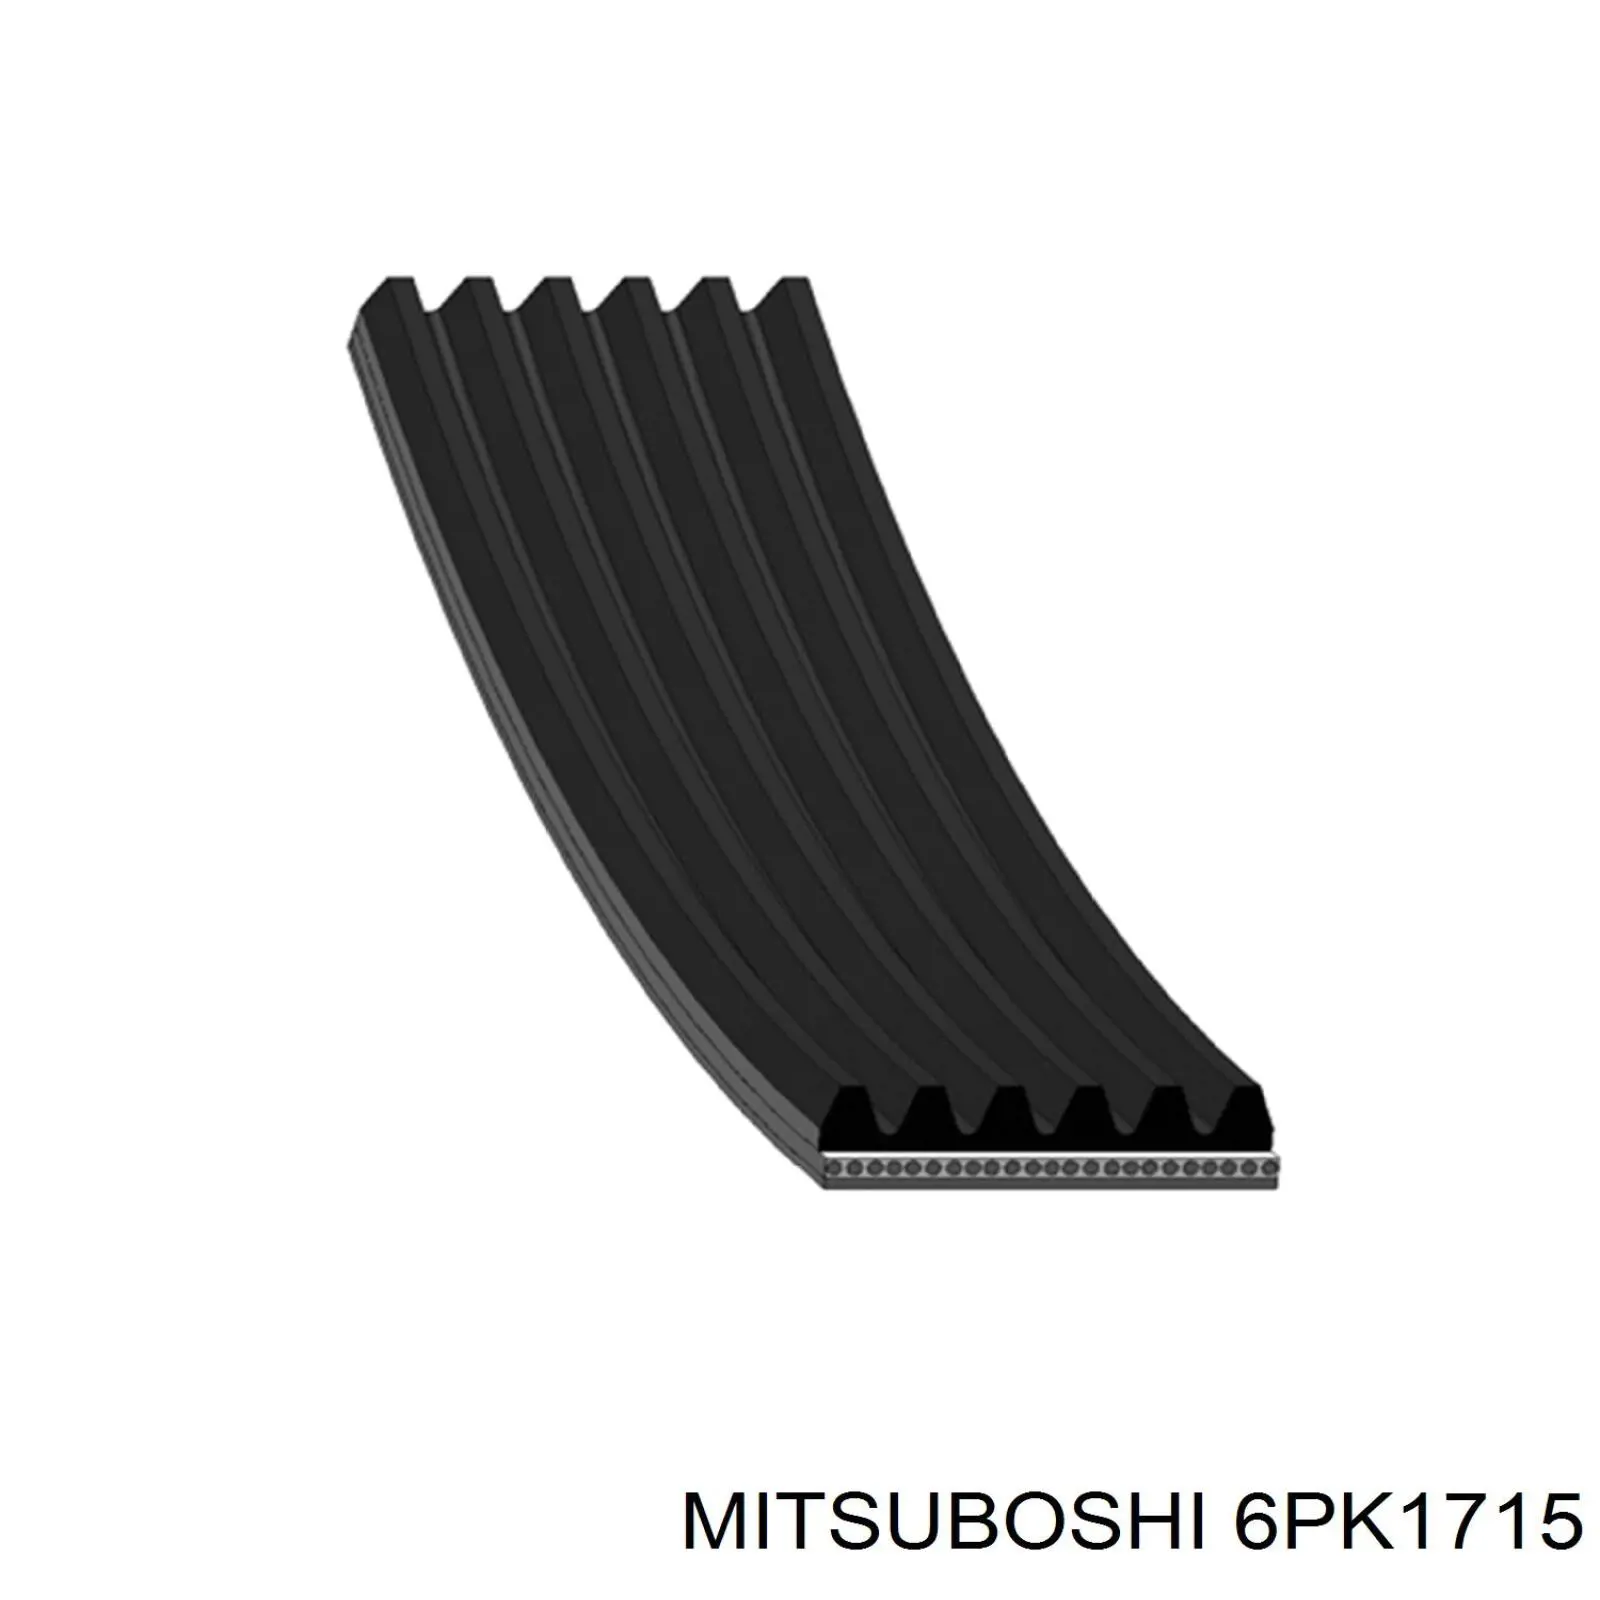 6PK1715 Mitsuboshi correa trapezoidal